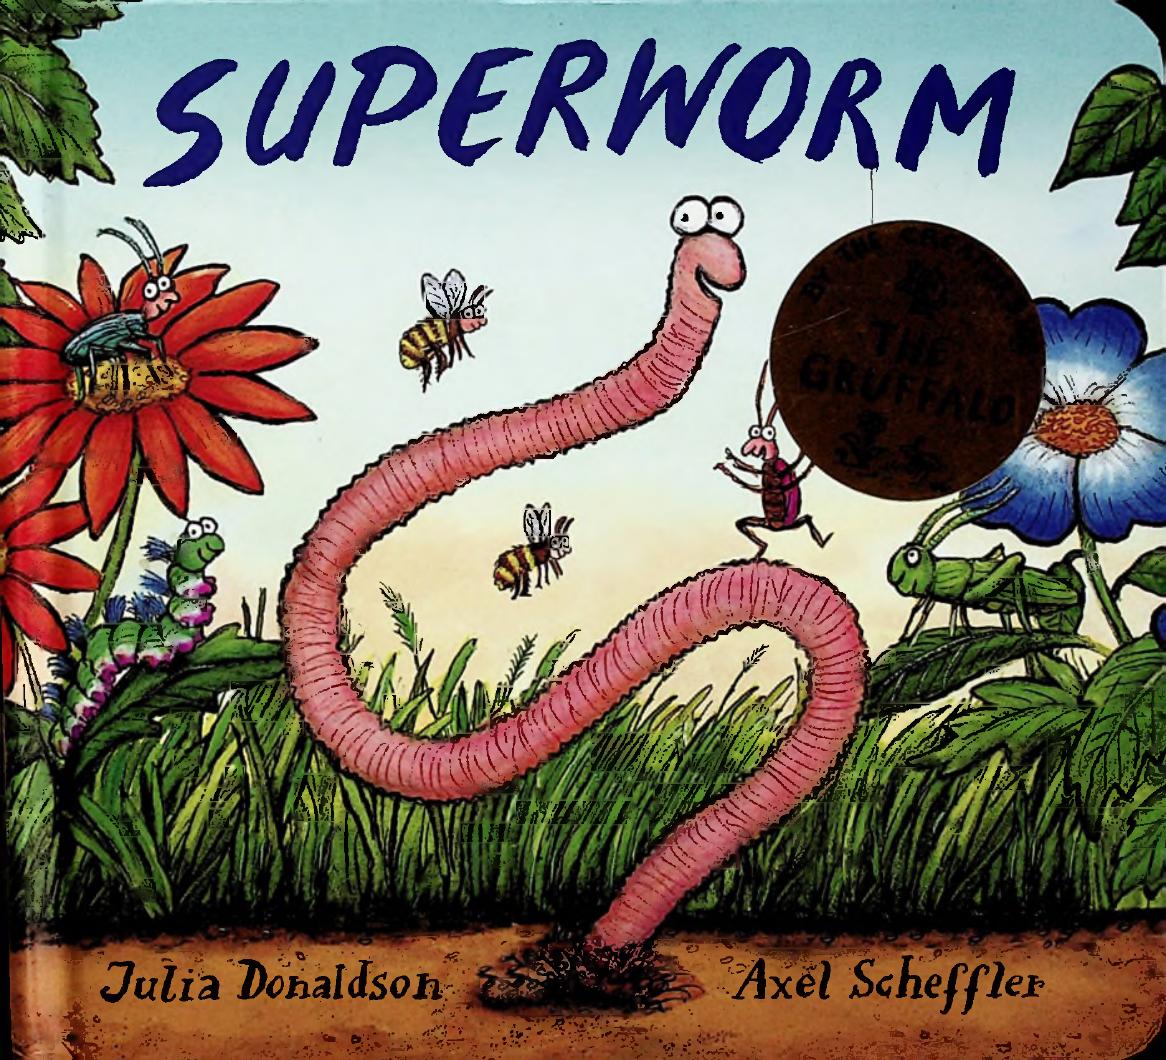 Superworm By Julia Donaldson